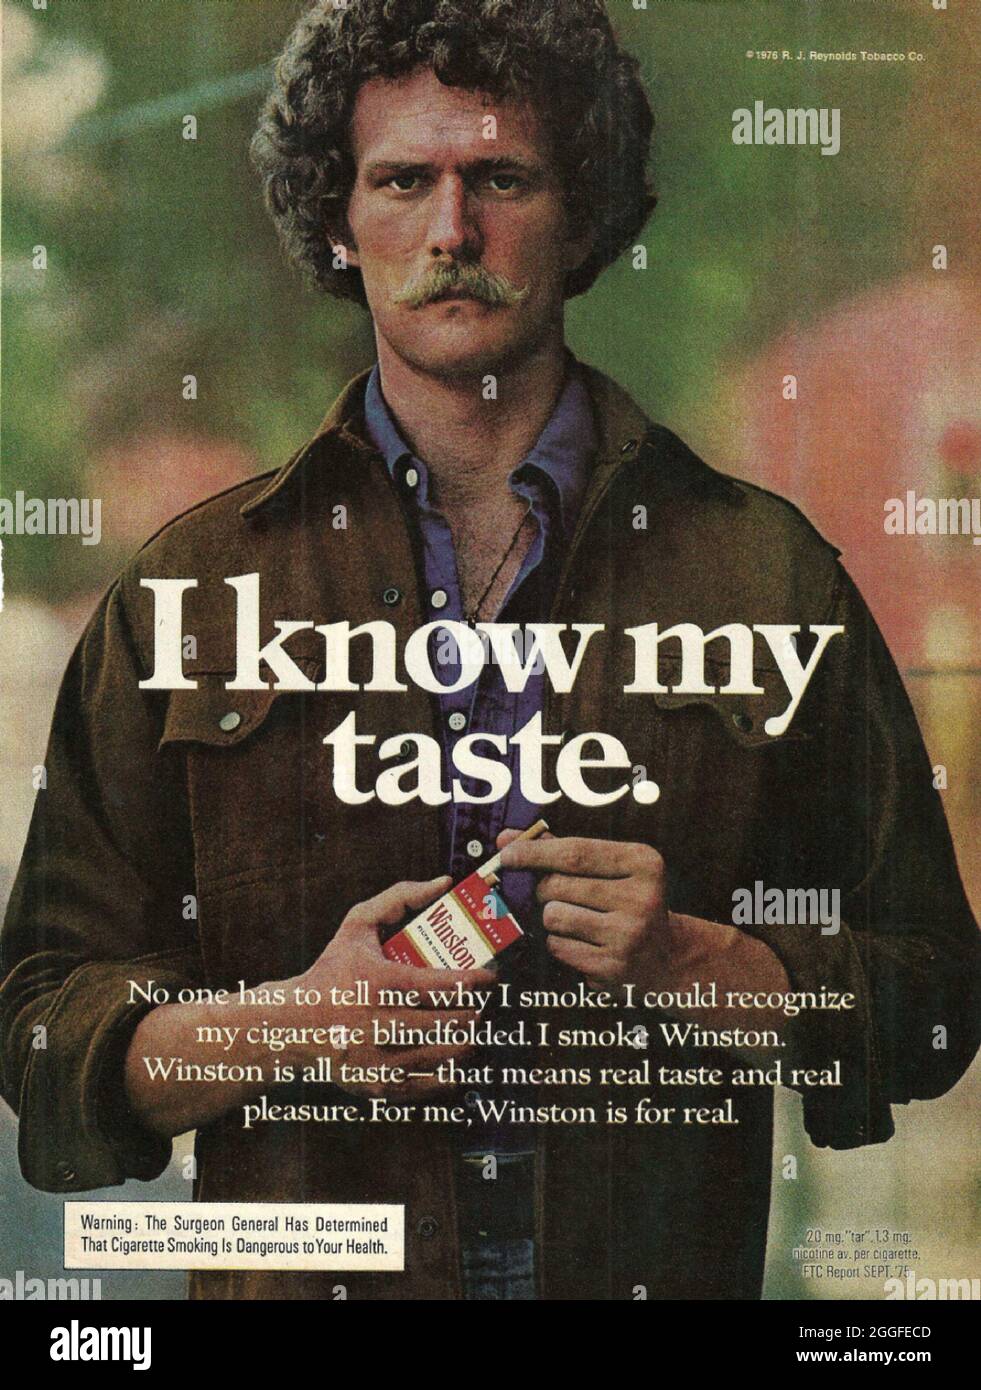 Winston cigarettes paper advert ad advertisement 1970s 1980s american cigarettes Stock Photo